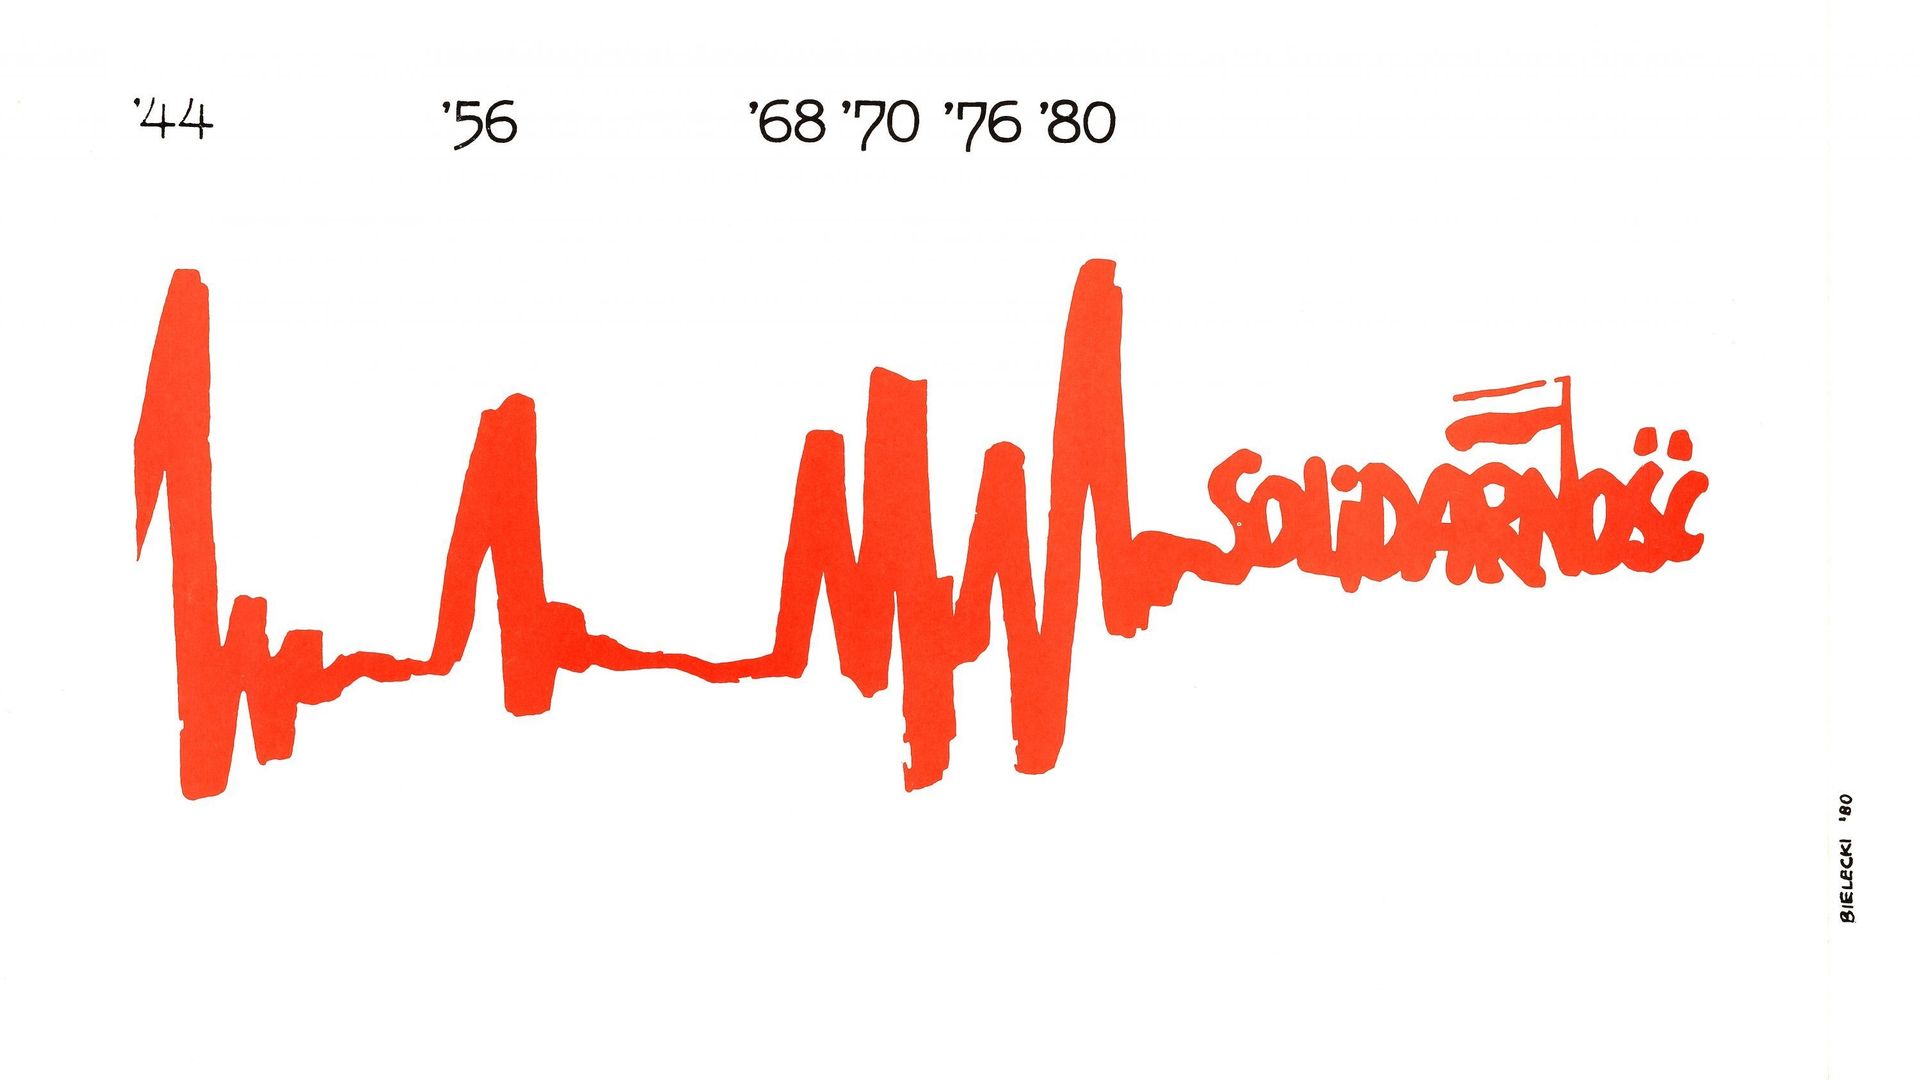 Cardiogram déclinaison du logo emblématique de Solidarnosc, Czeslaw Bielecki - Poland, 1980

